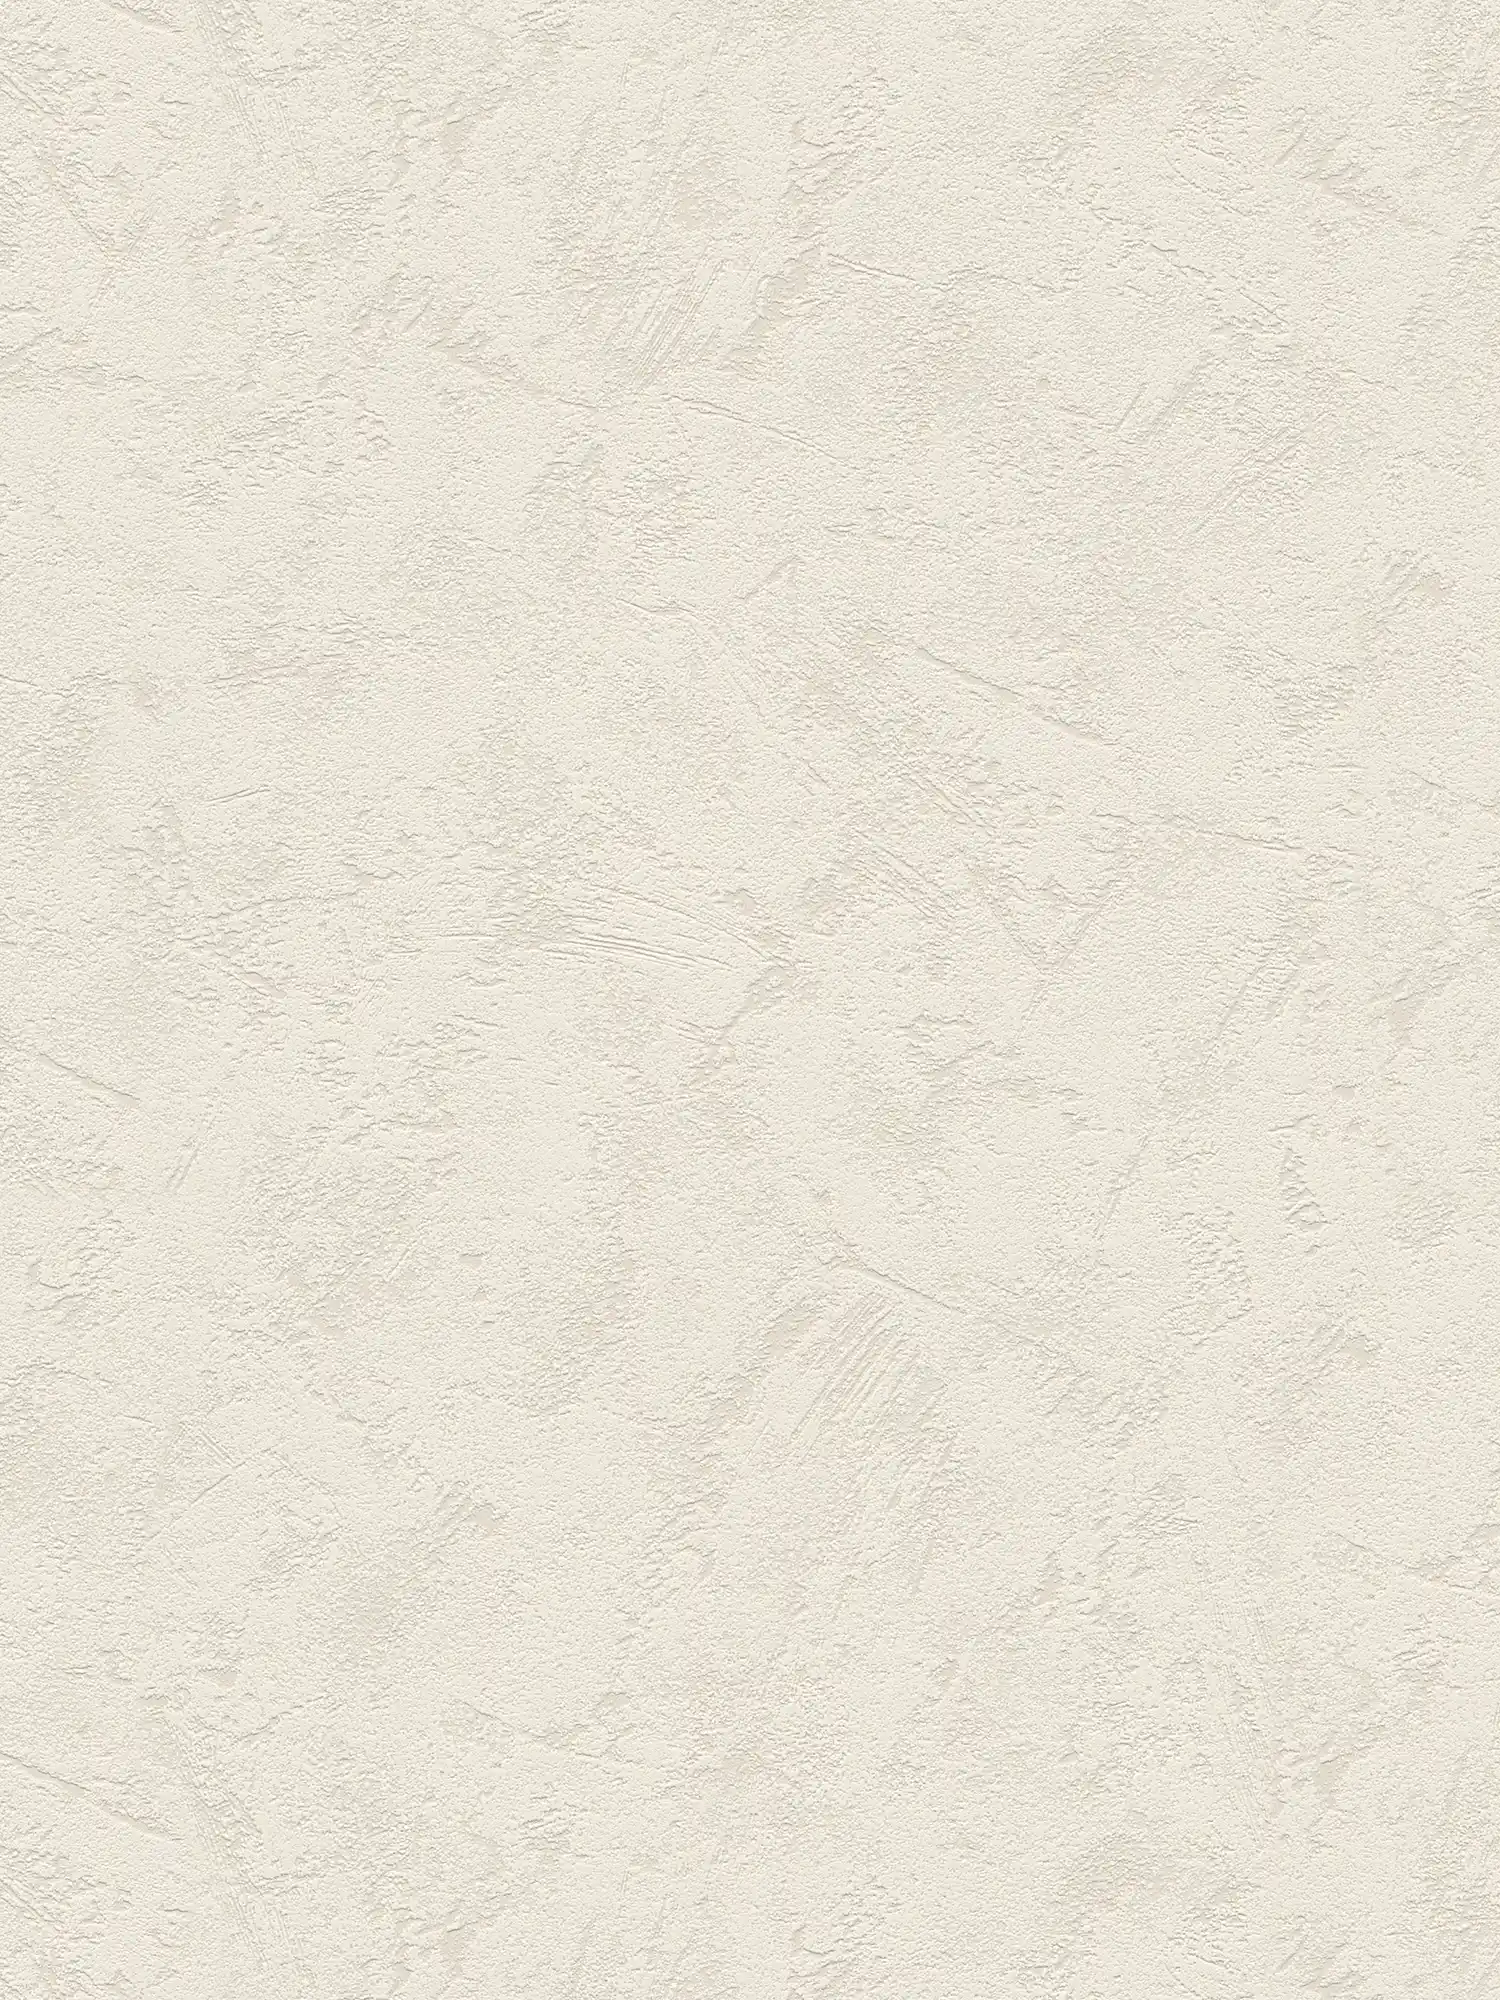 Classic plaster look wallpaper light grey with trowel plaster pattern
